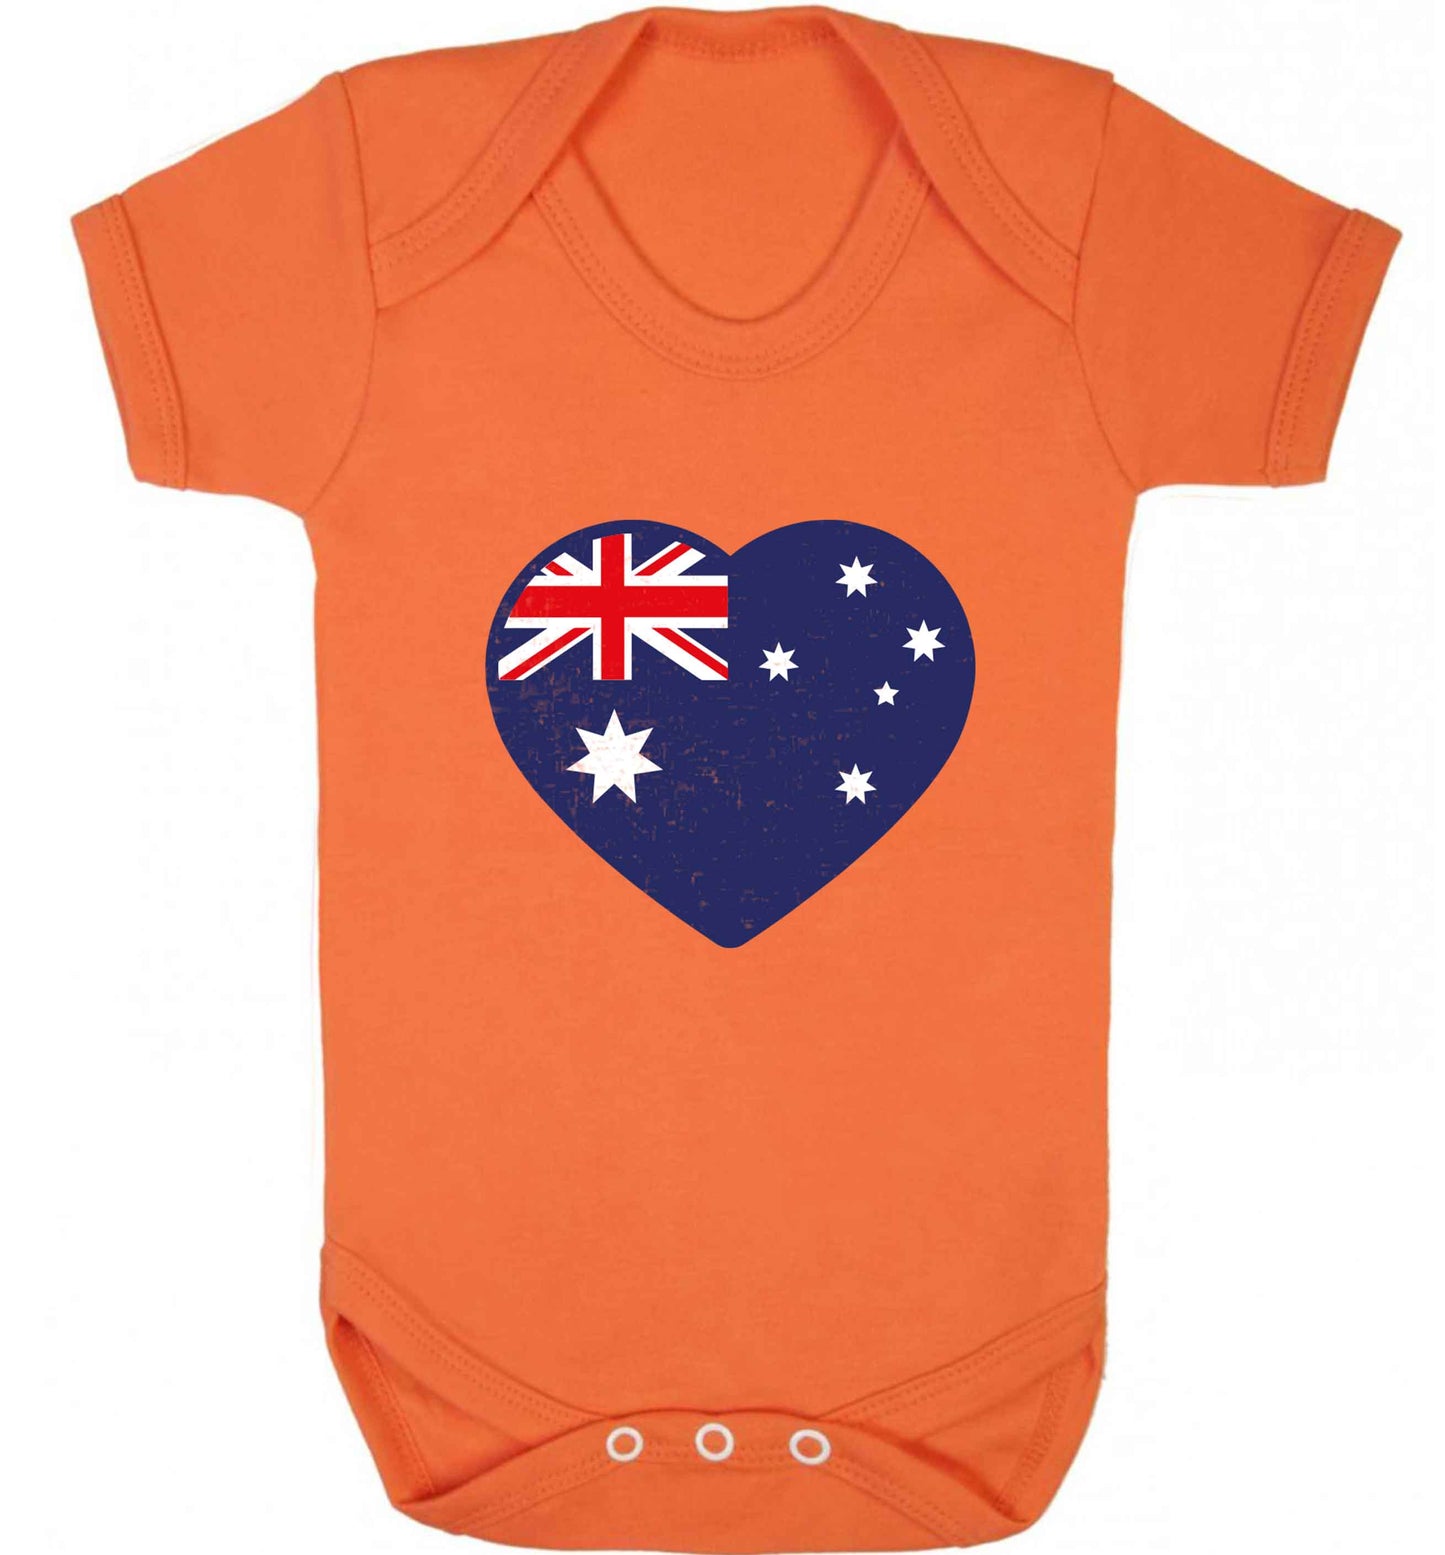 Australian Heart baby vest orange 18-24 months